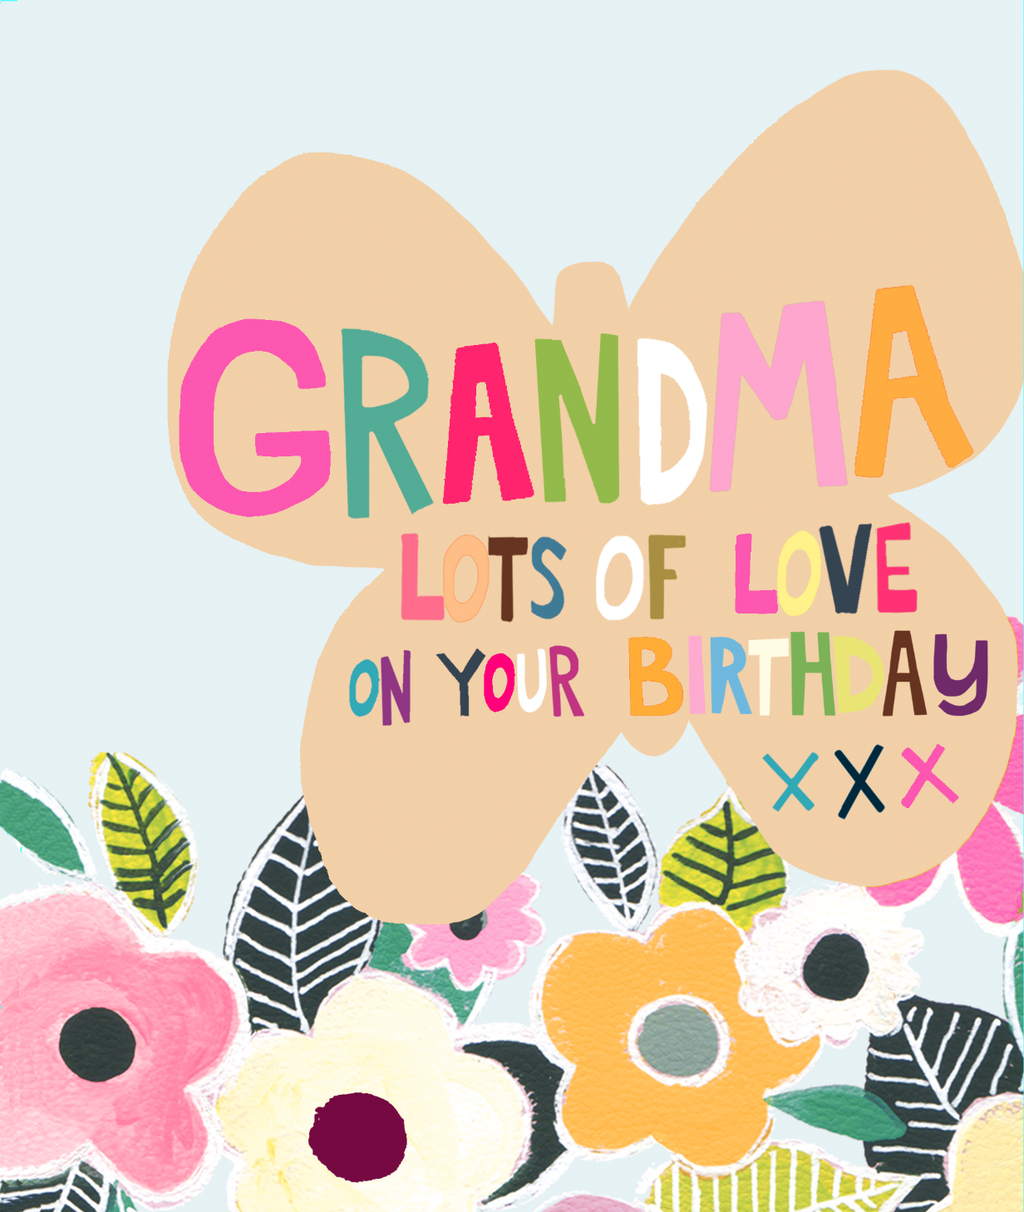 Grandma Lots of Love on your Birthday